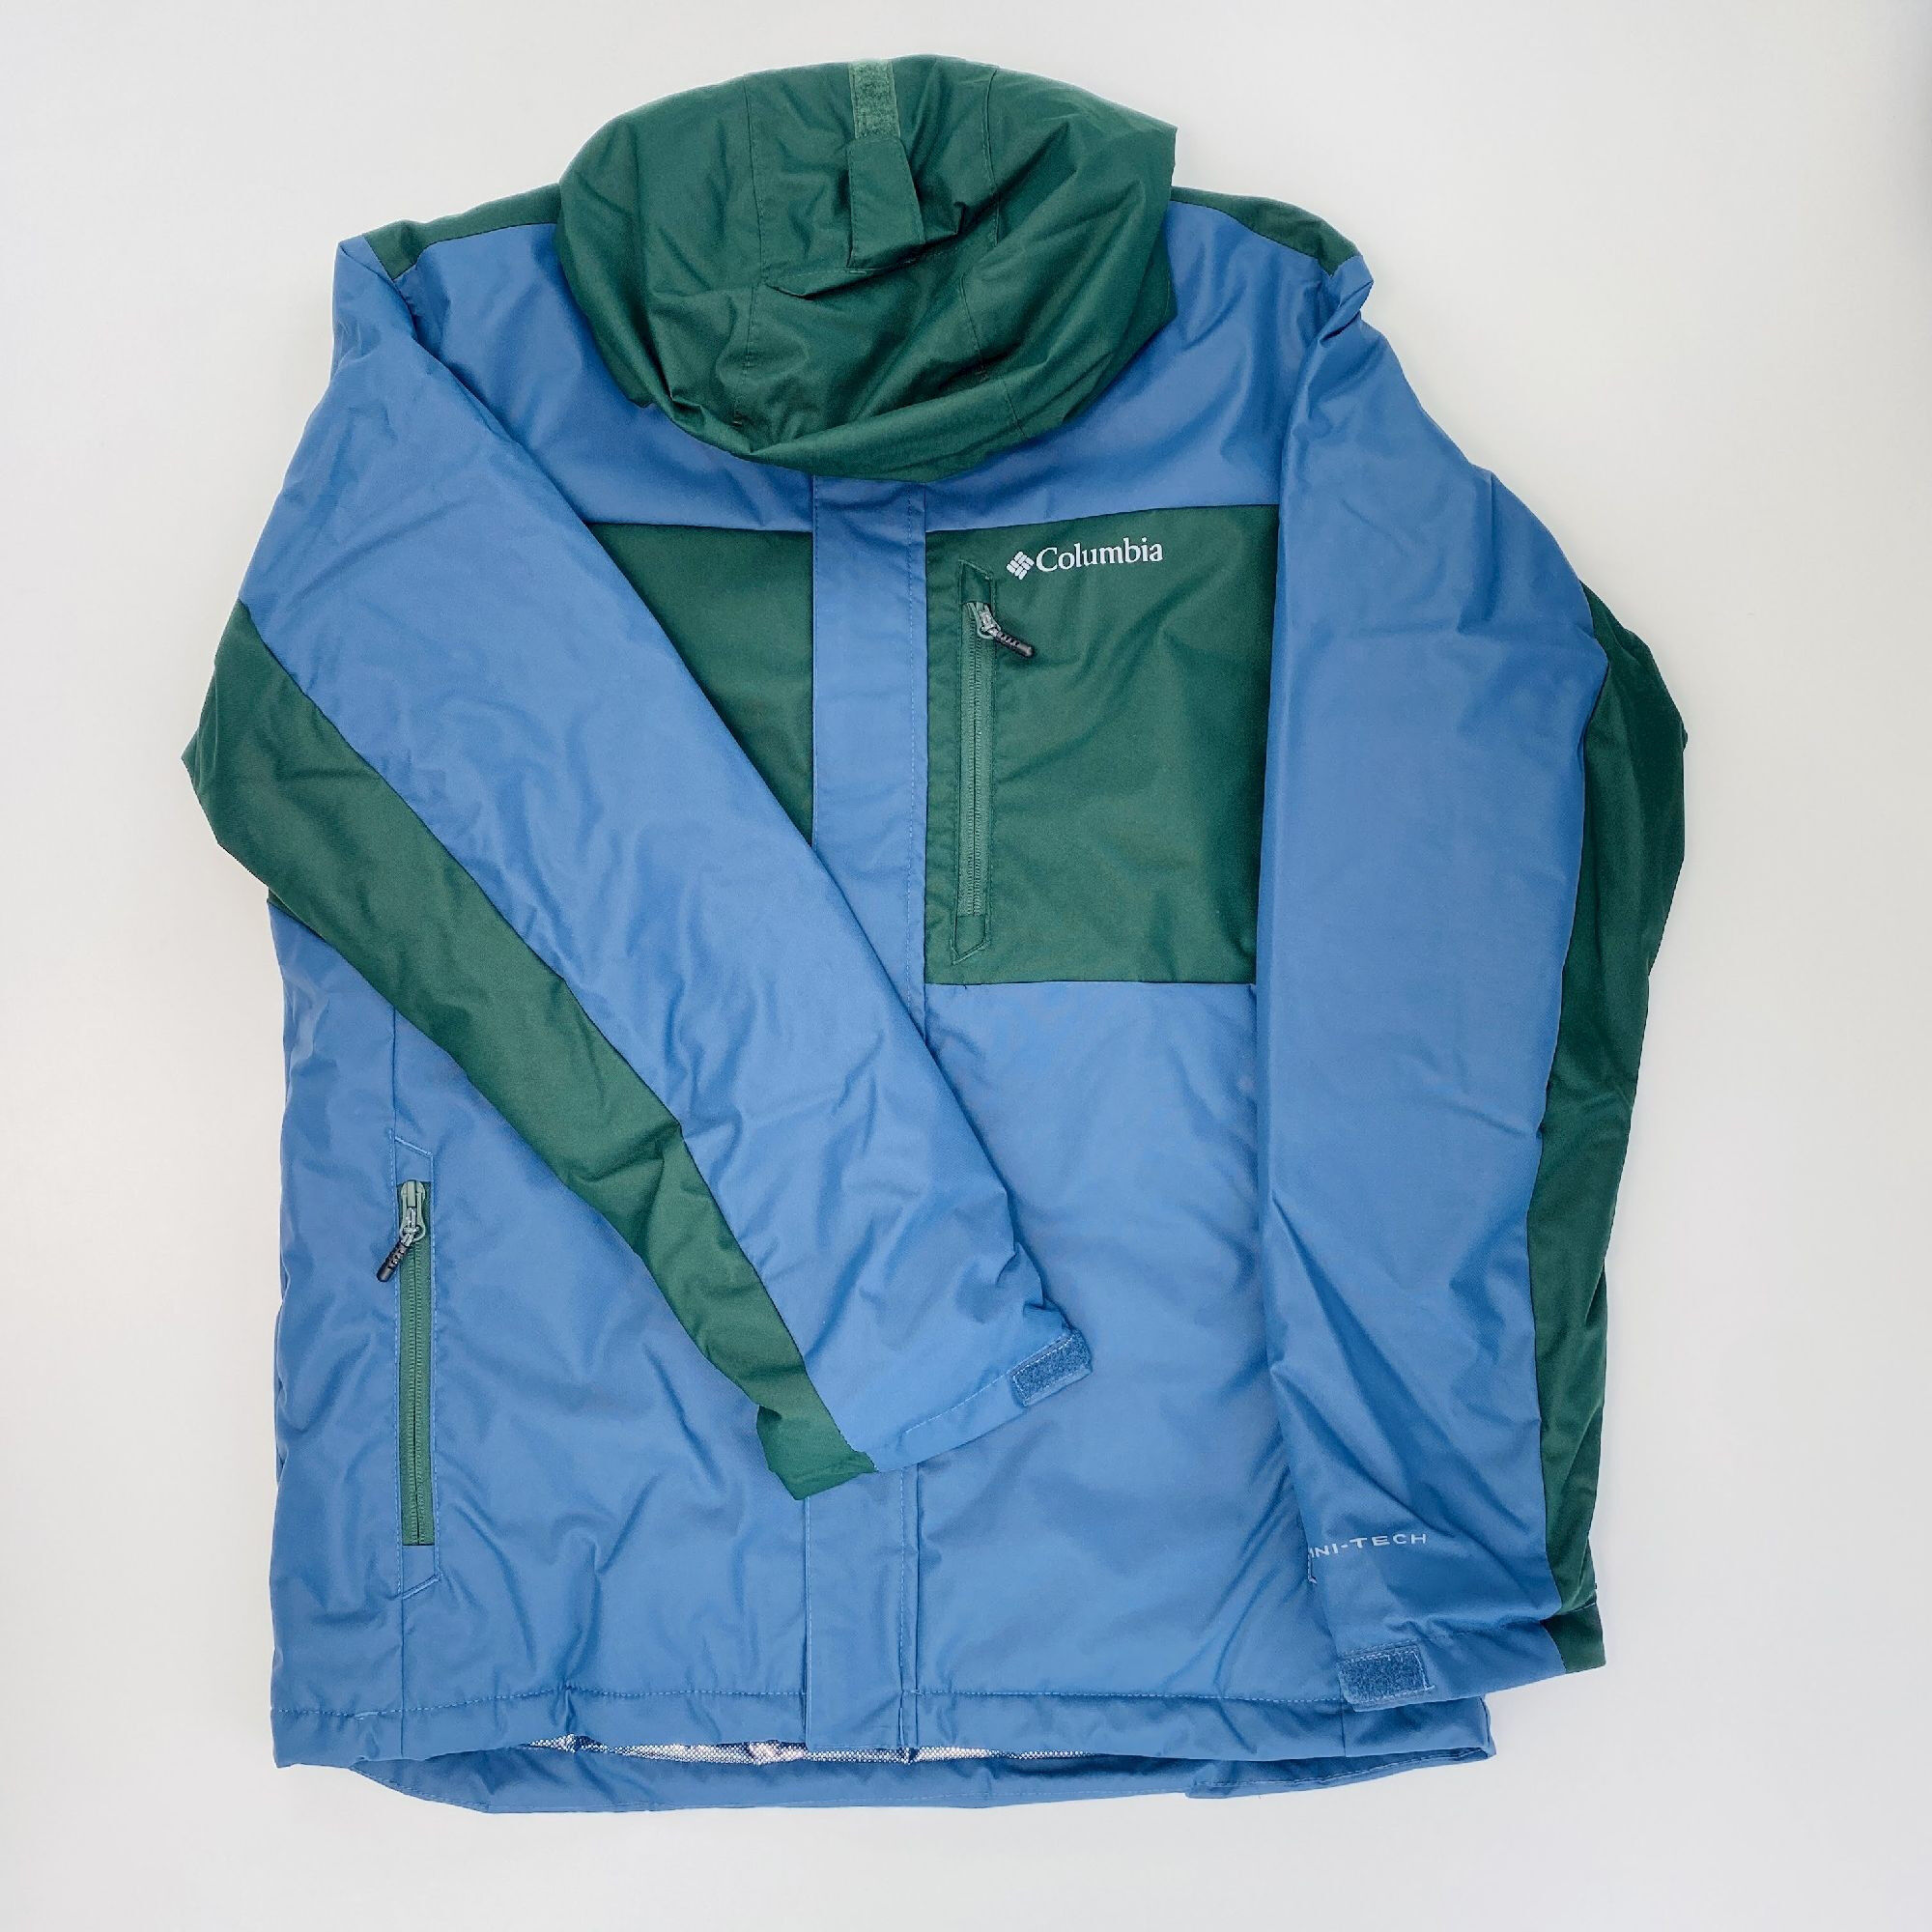 Columbia Tipton Peak™ II Insulated Jacket - Giacca antipioggia di seconda mano - Uomo - Blu - M | Hardloop